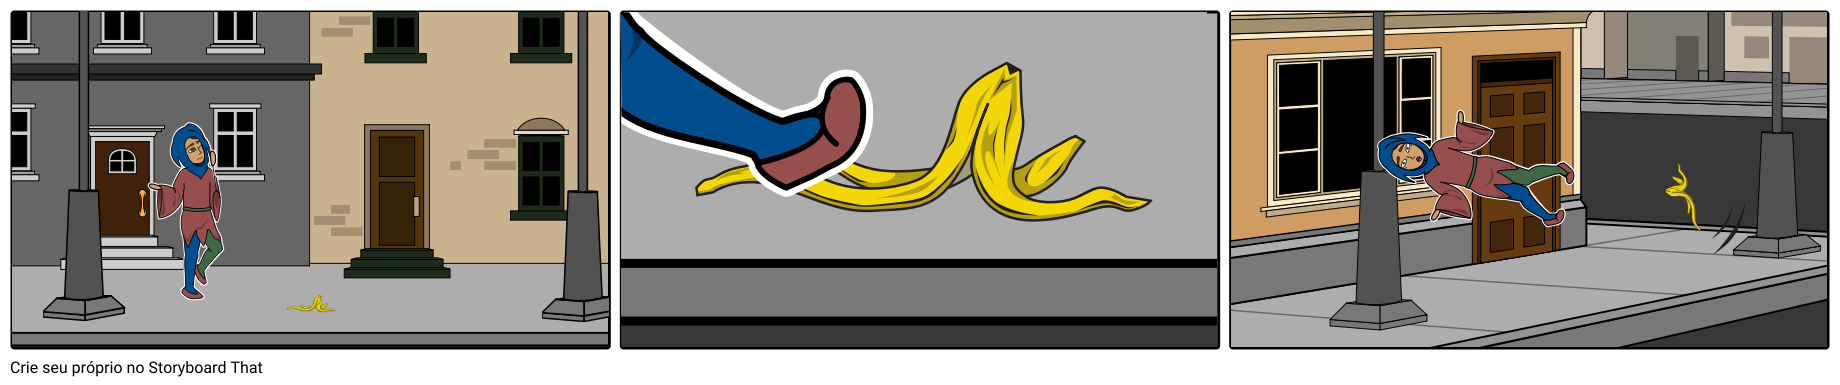 Jester desliza na casca de banana